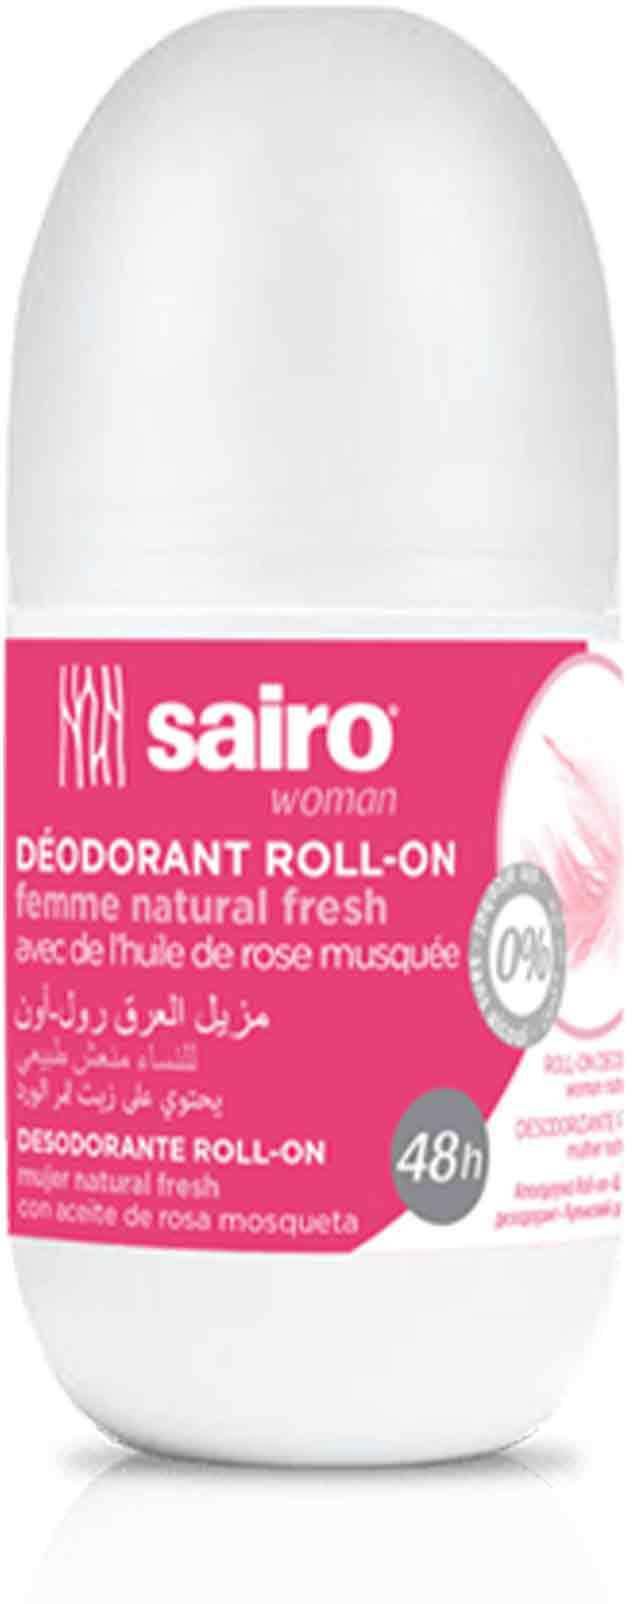 Sairo deodorant roll on women 50ml